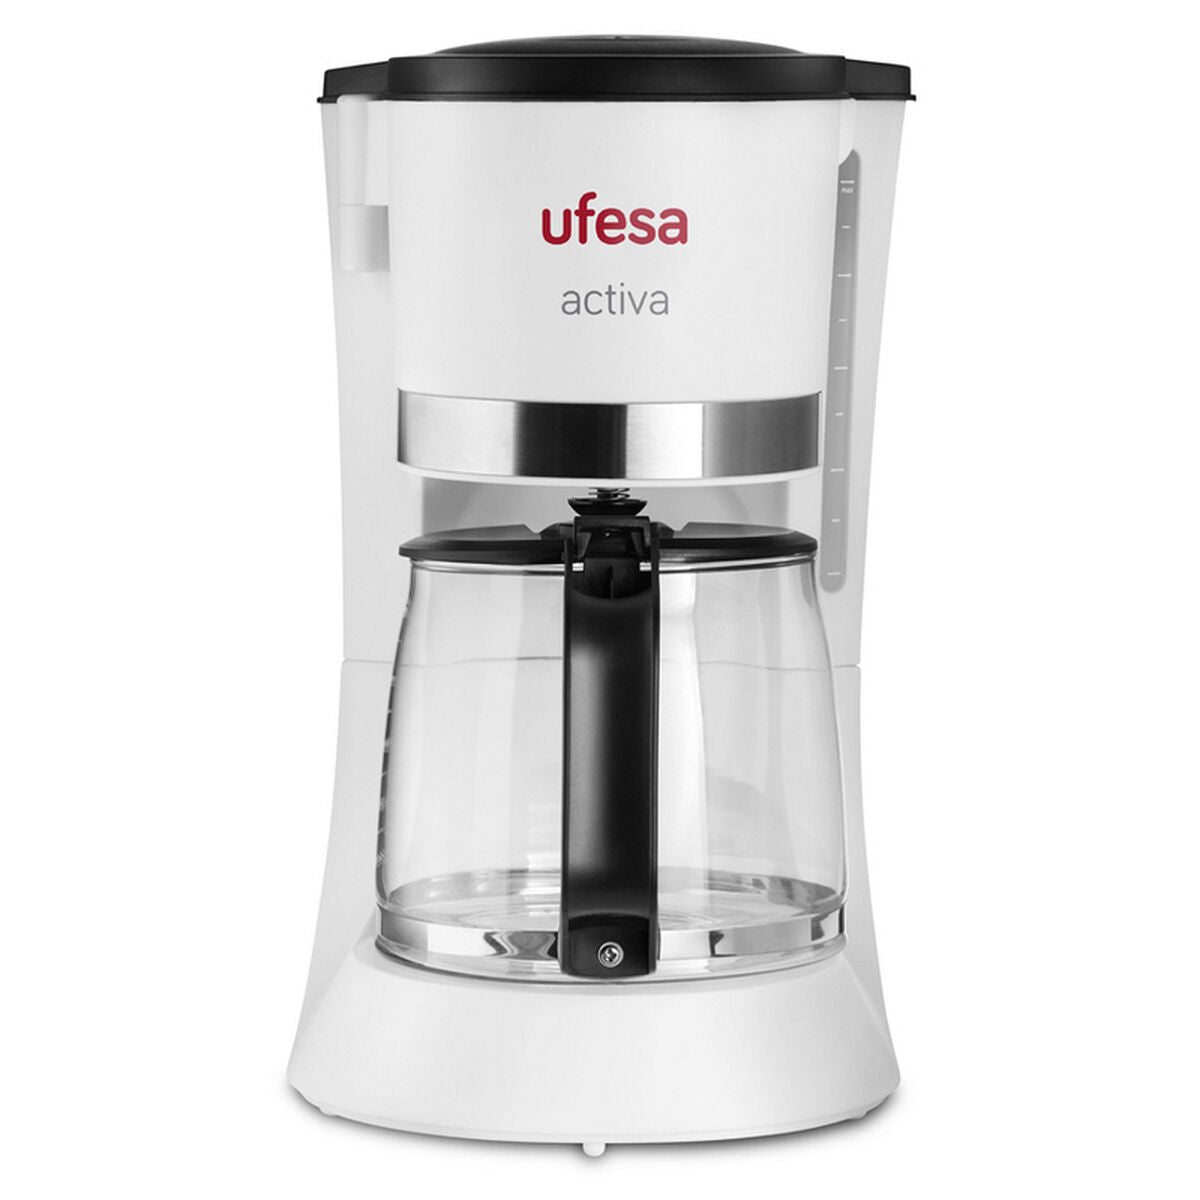 Filterkaffeemaschine UFESA CG7113 550 W 750 ml 6 Tassen - CA International 